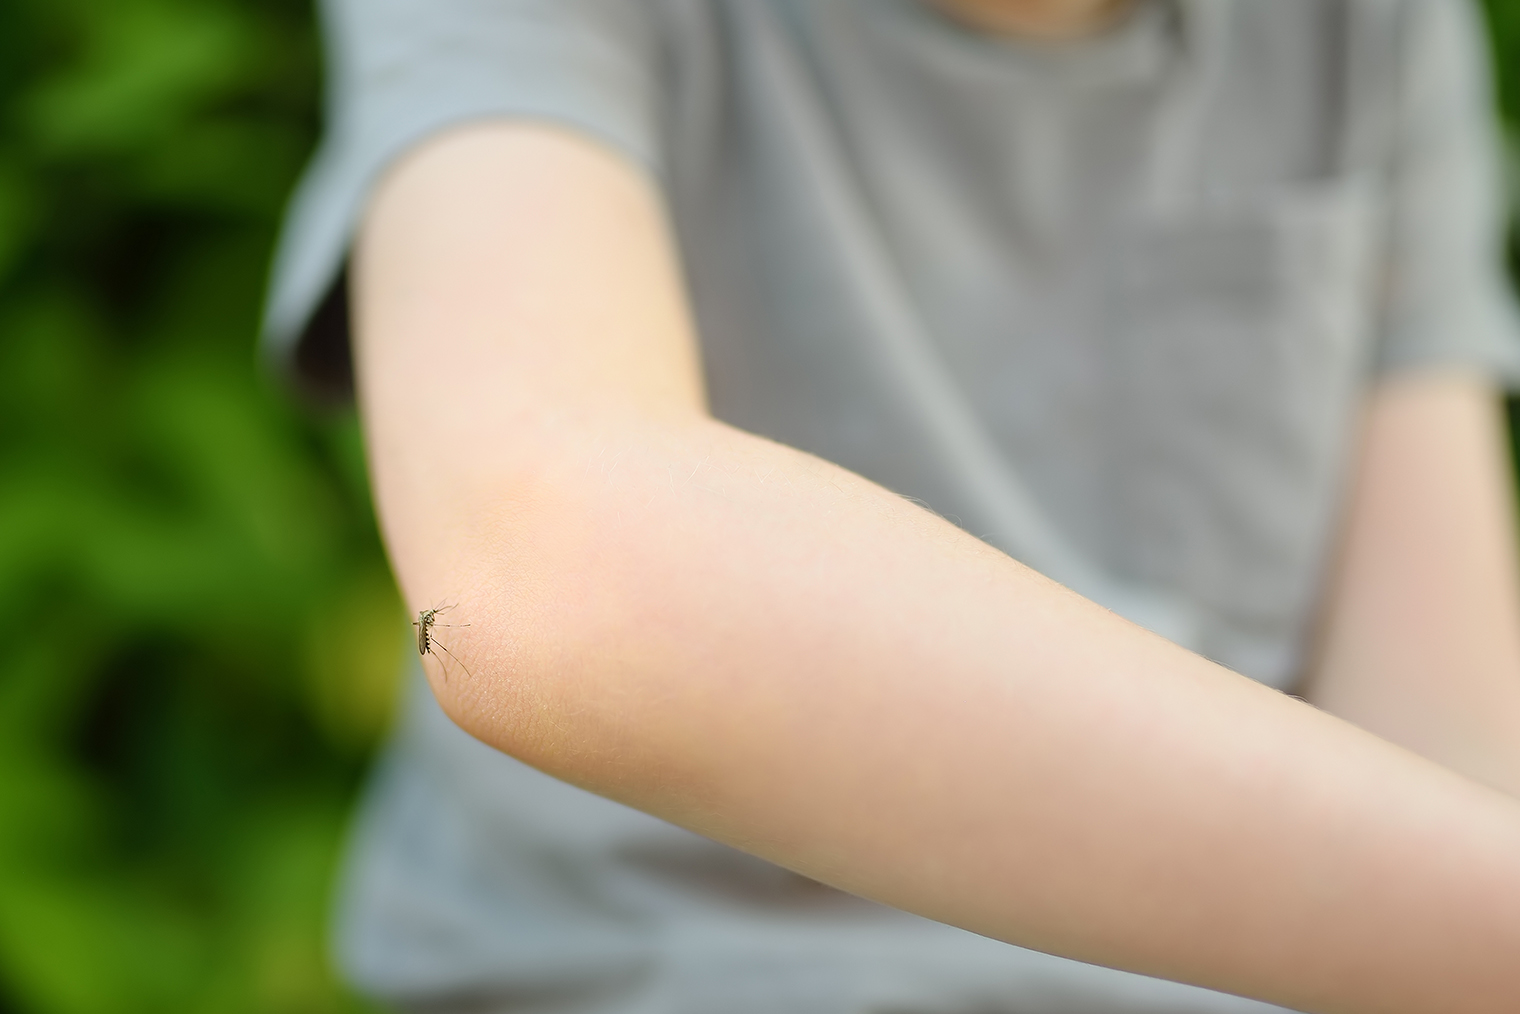 mosquito on kid's elbow exterminator extermination child arm outside nature